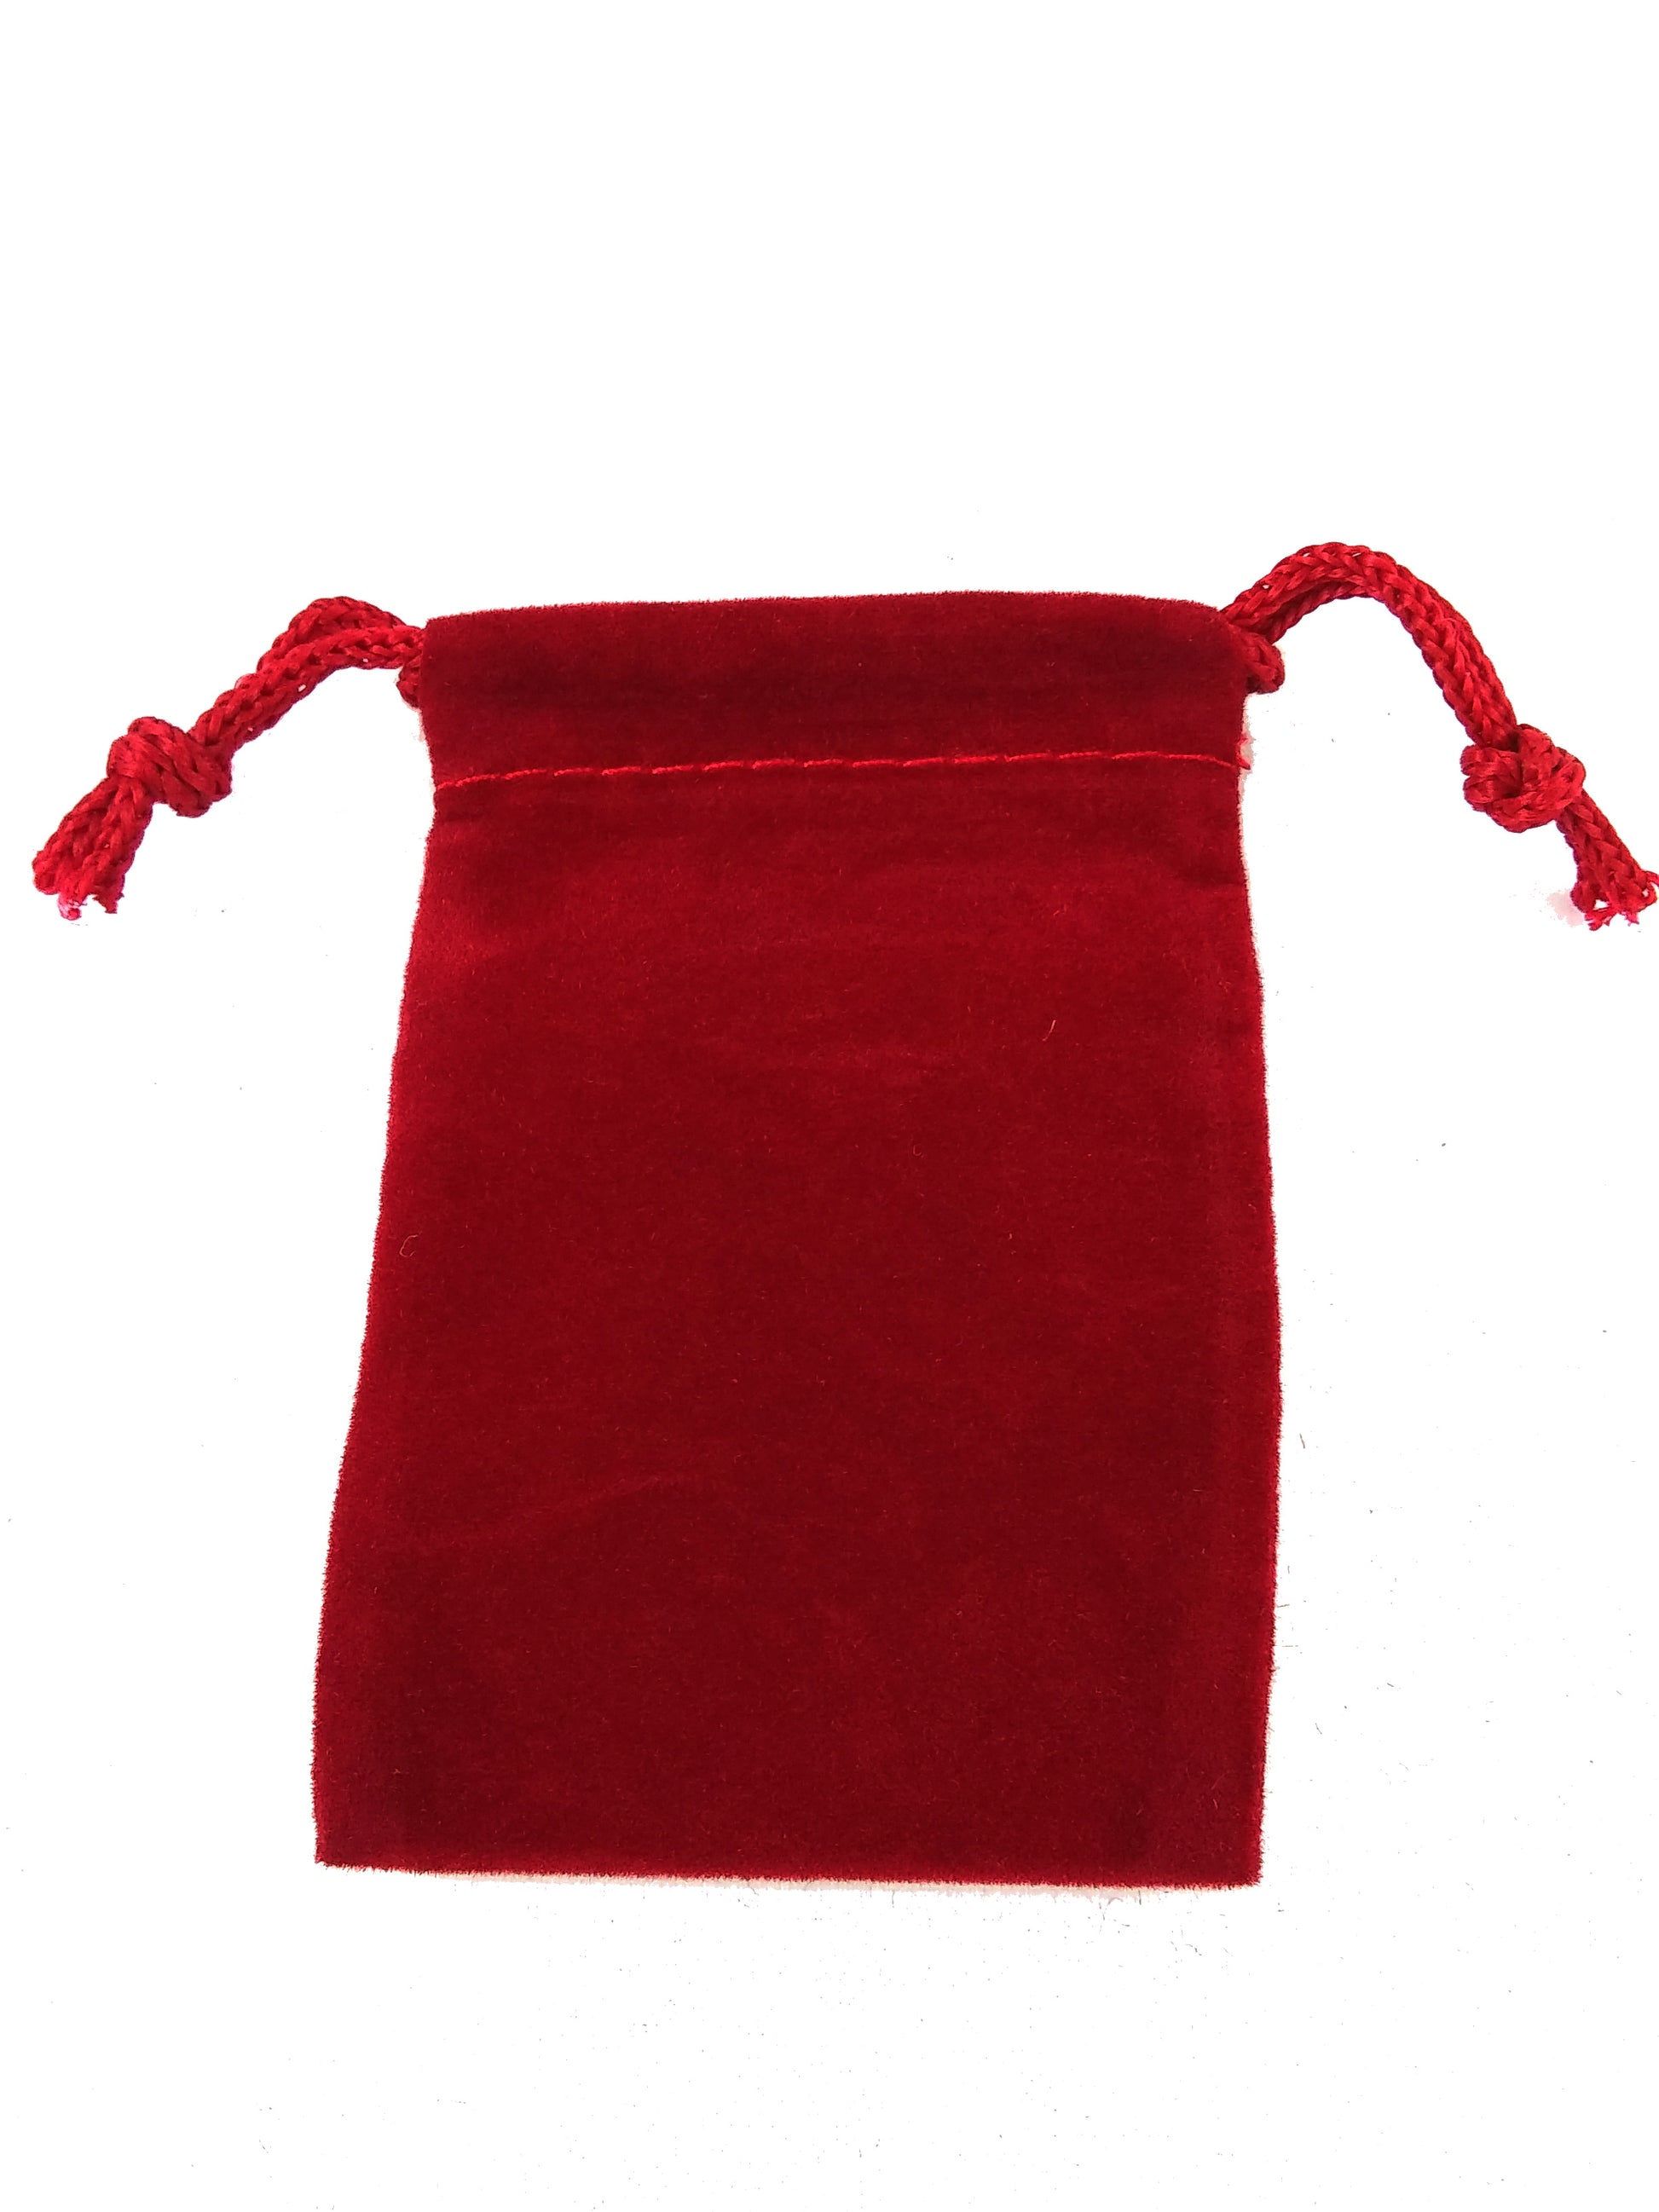 2x3 red felt bag